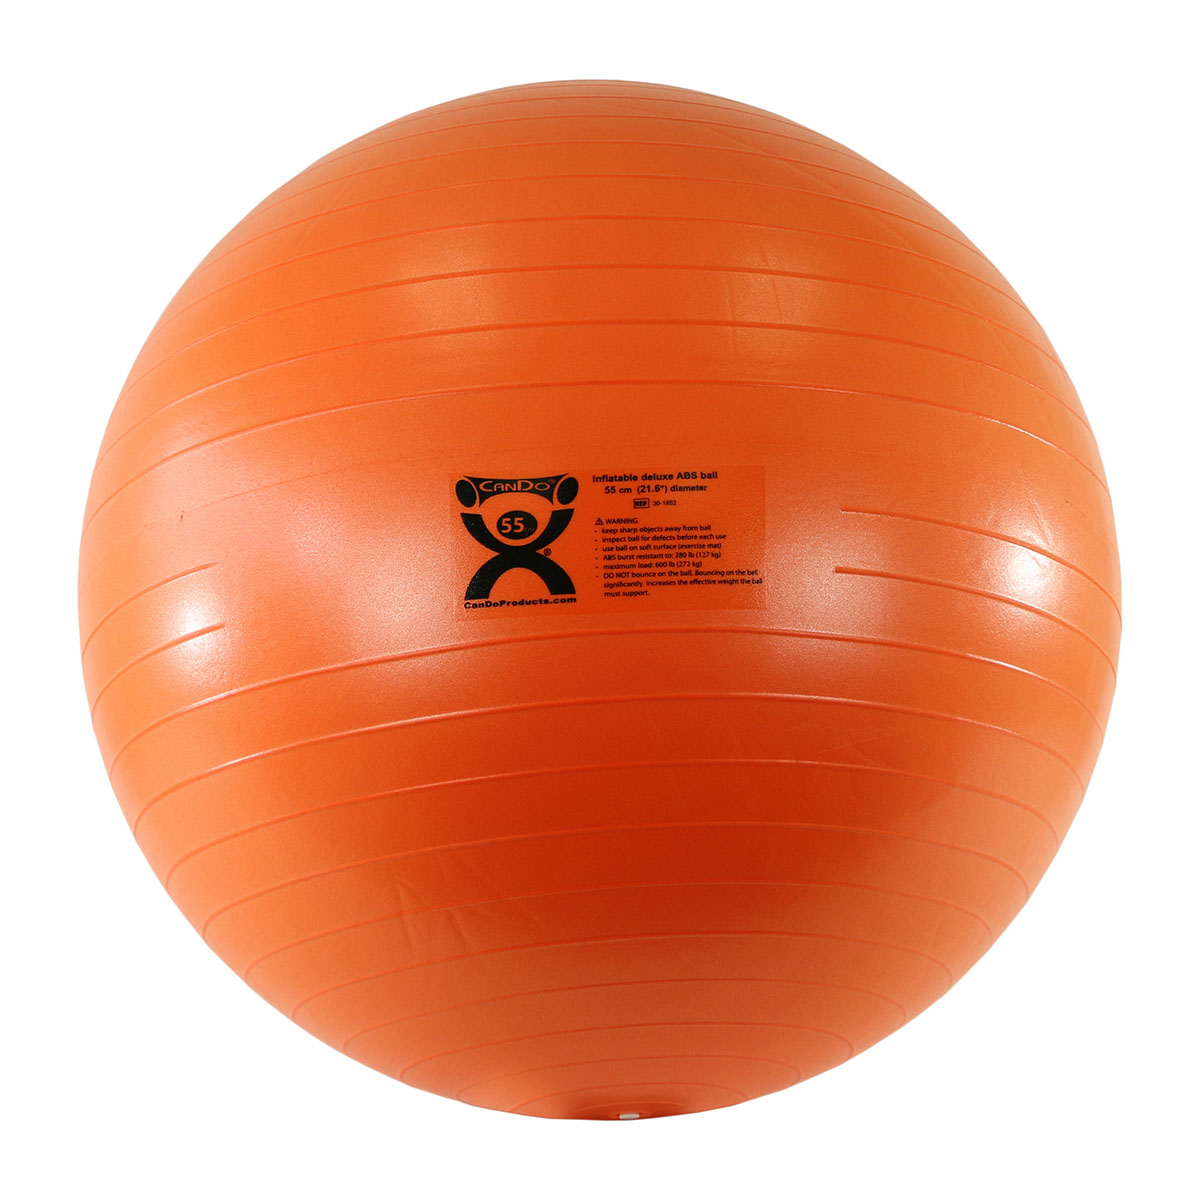 https://www.3bscientific.com/thumblibrary/W40138/W40138_01_1200_1200_Cando-Deluxe-Anti-Burst-Exercise-Ball-orange-55cm.jpg